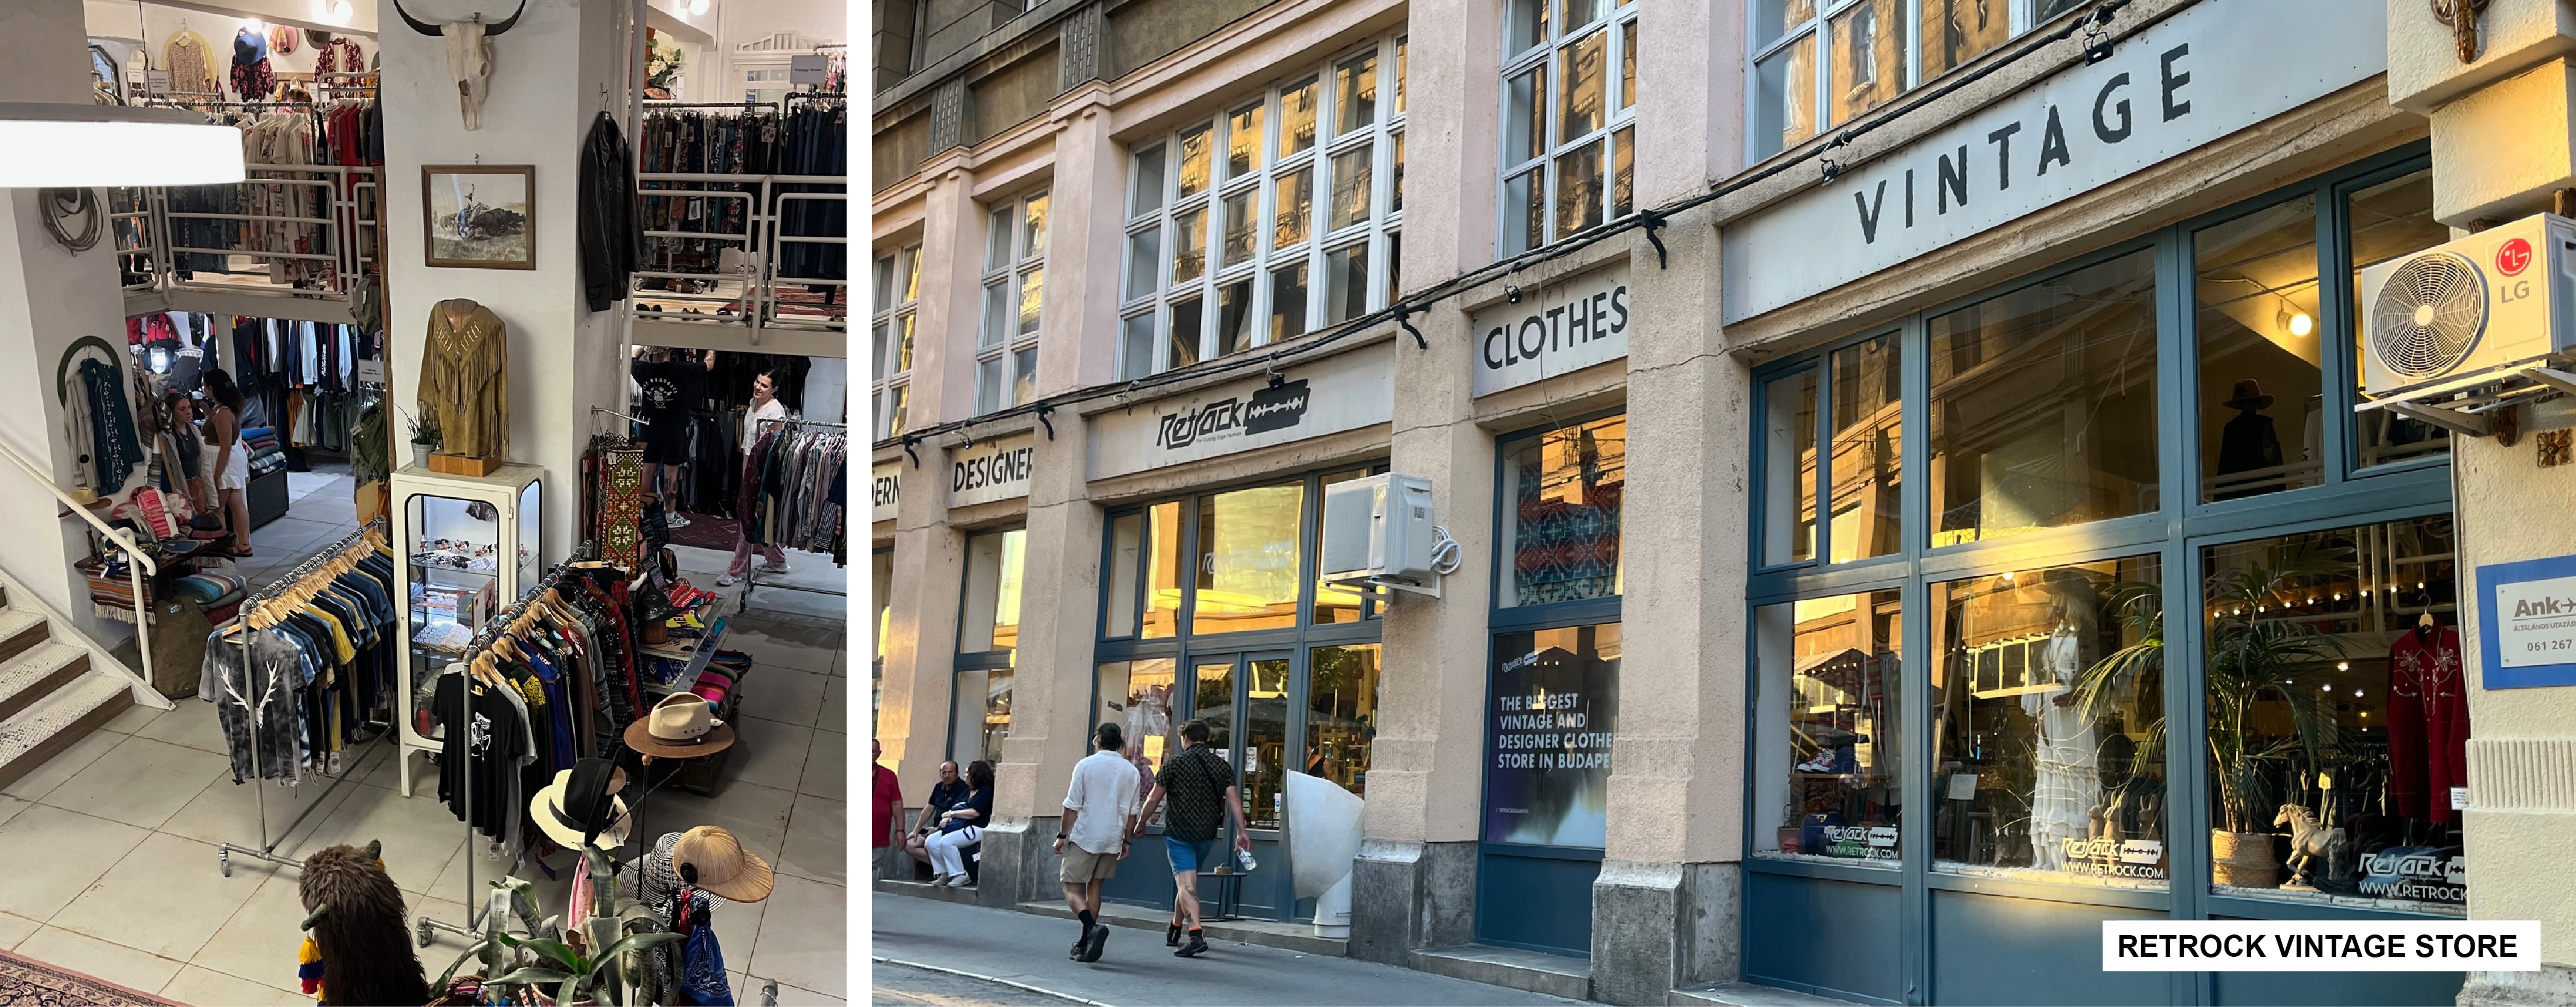 Retrock Vintage Store Budapest